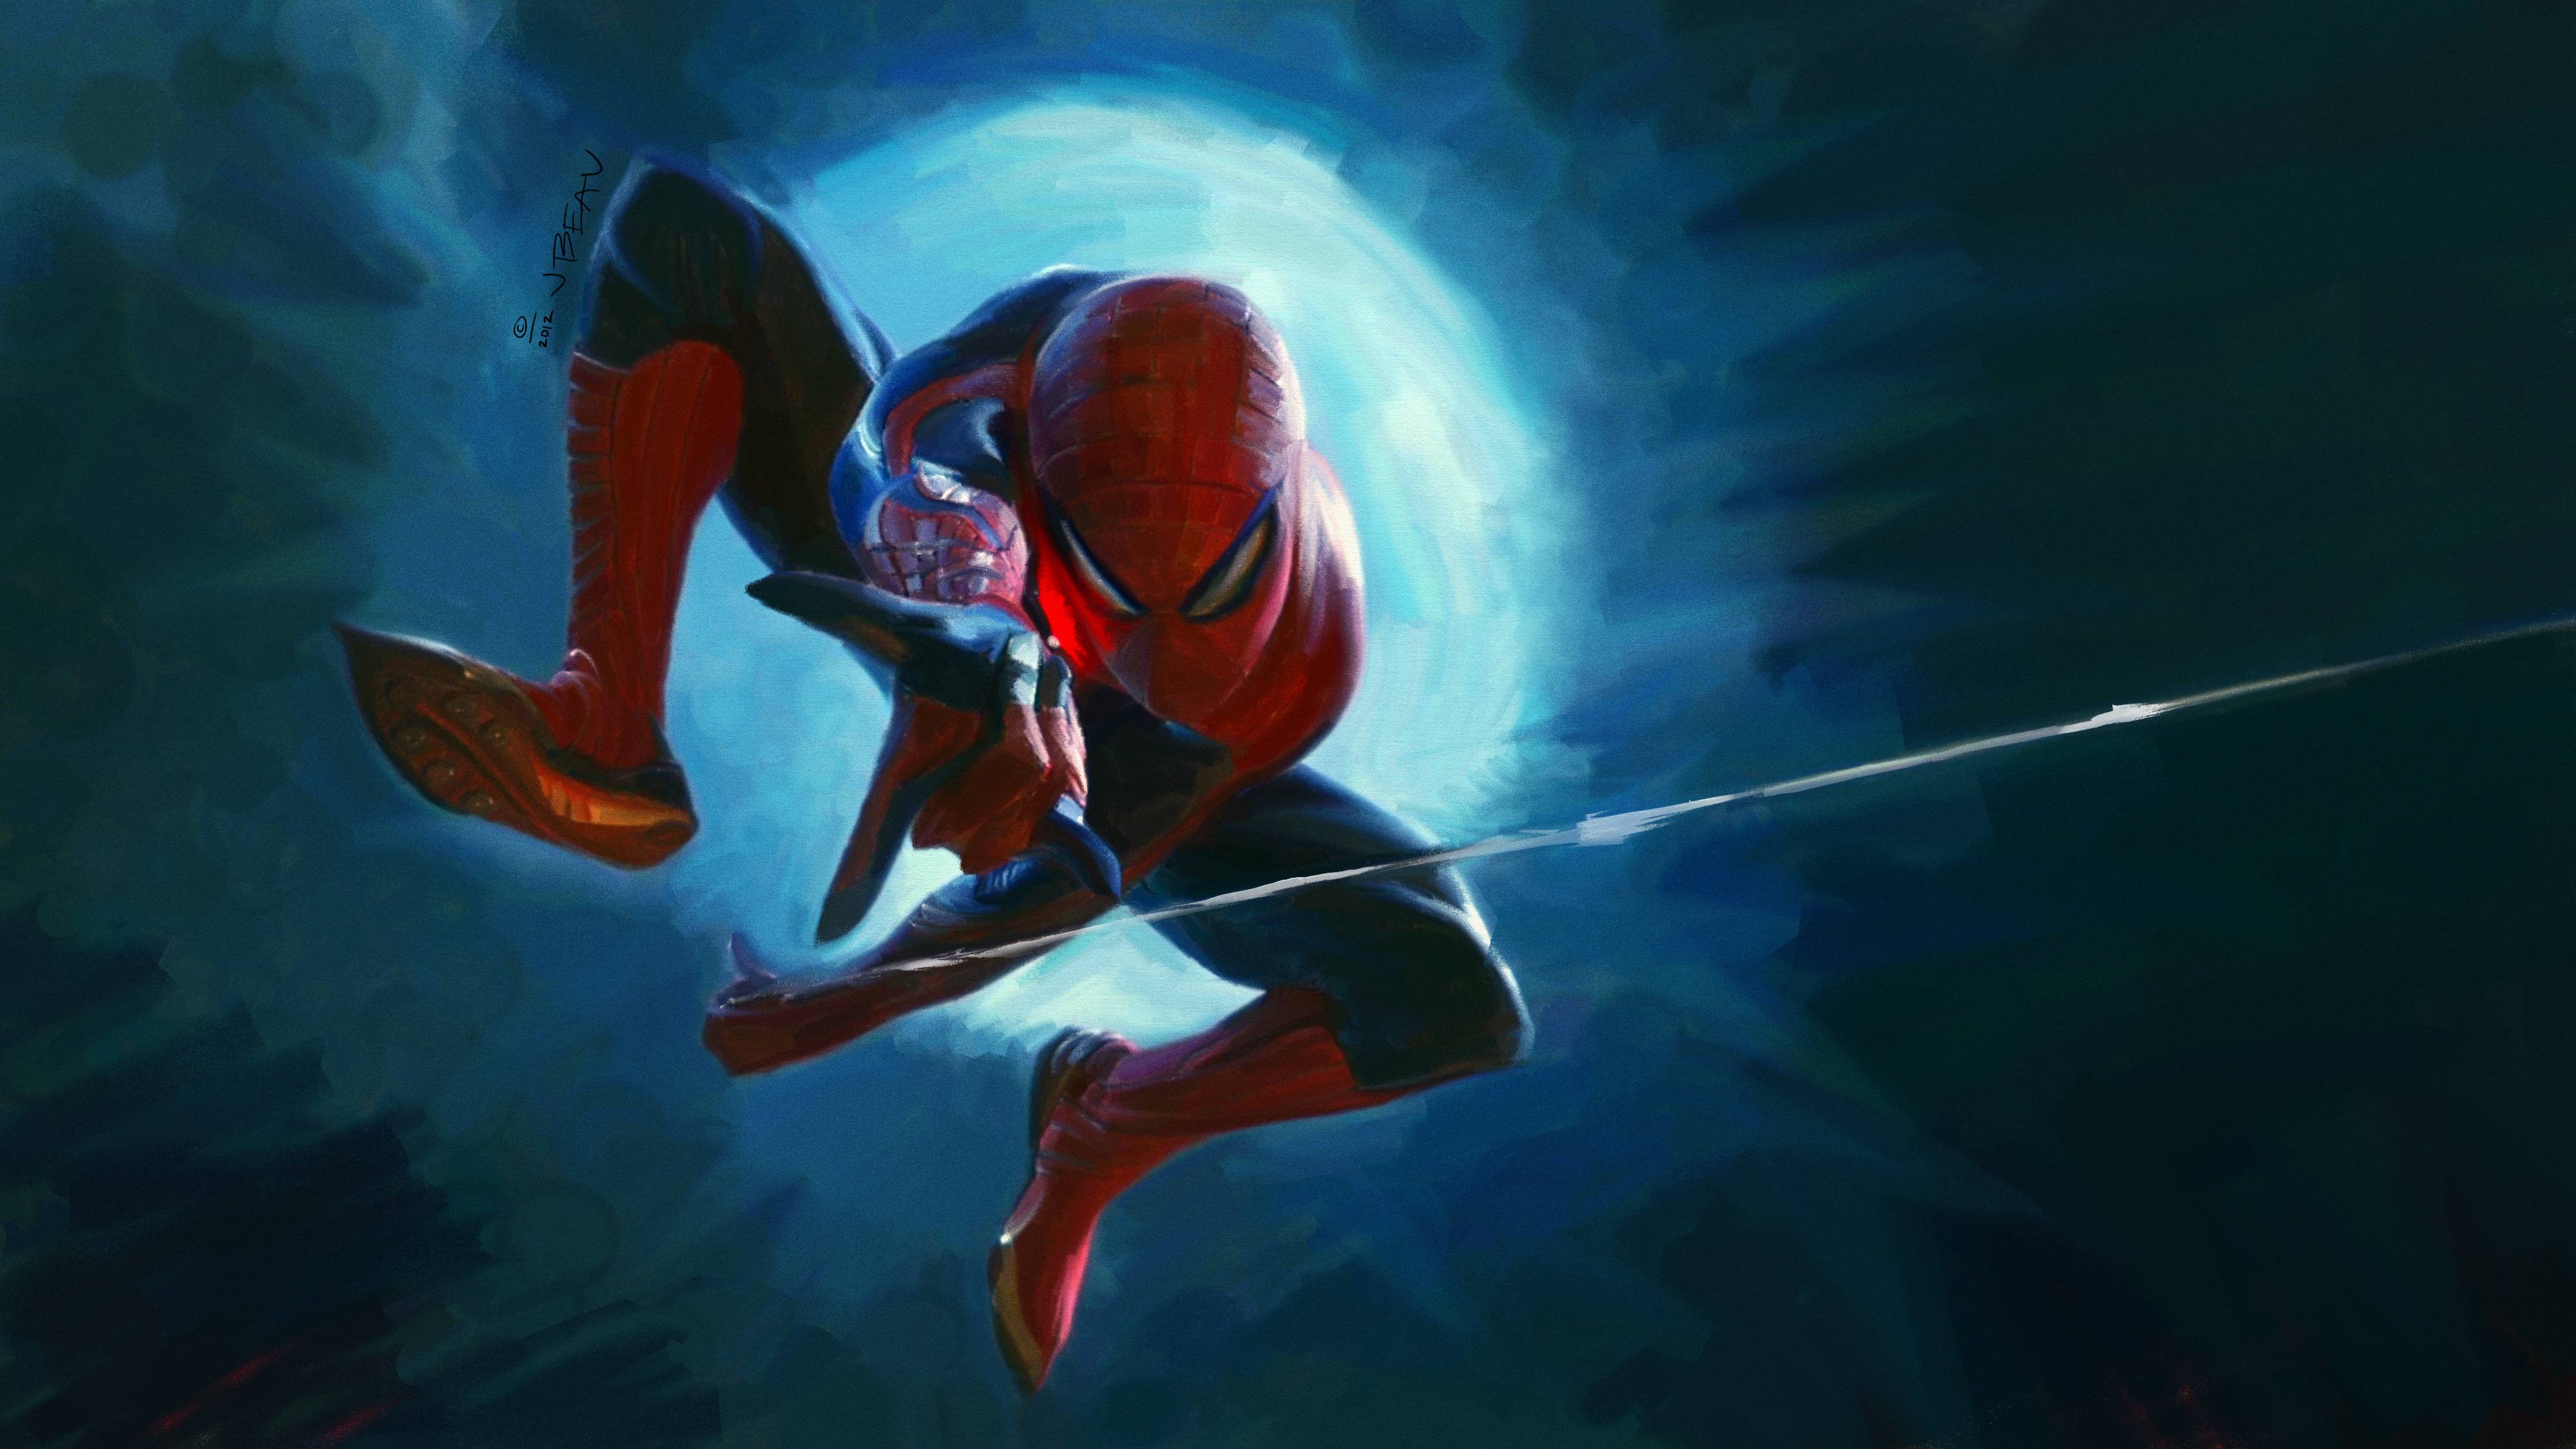 Spider Man Wallpaper. Spider Man Background and Image (35)